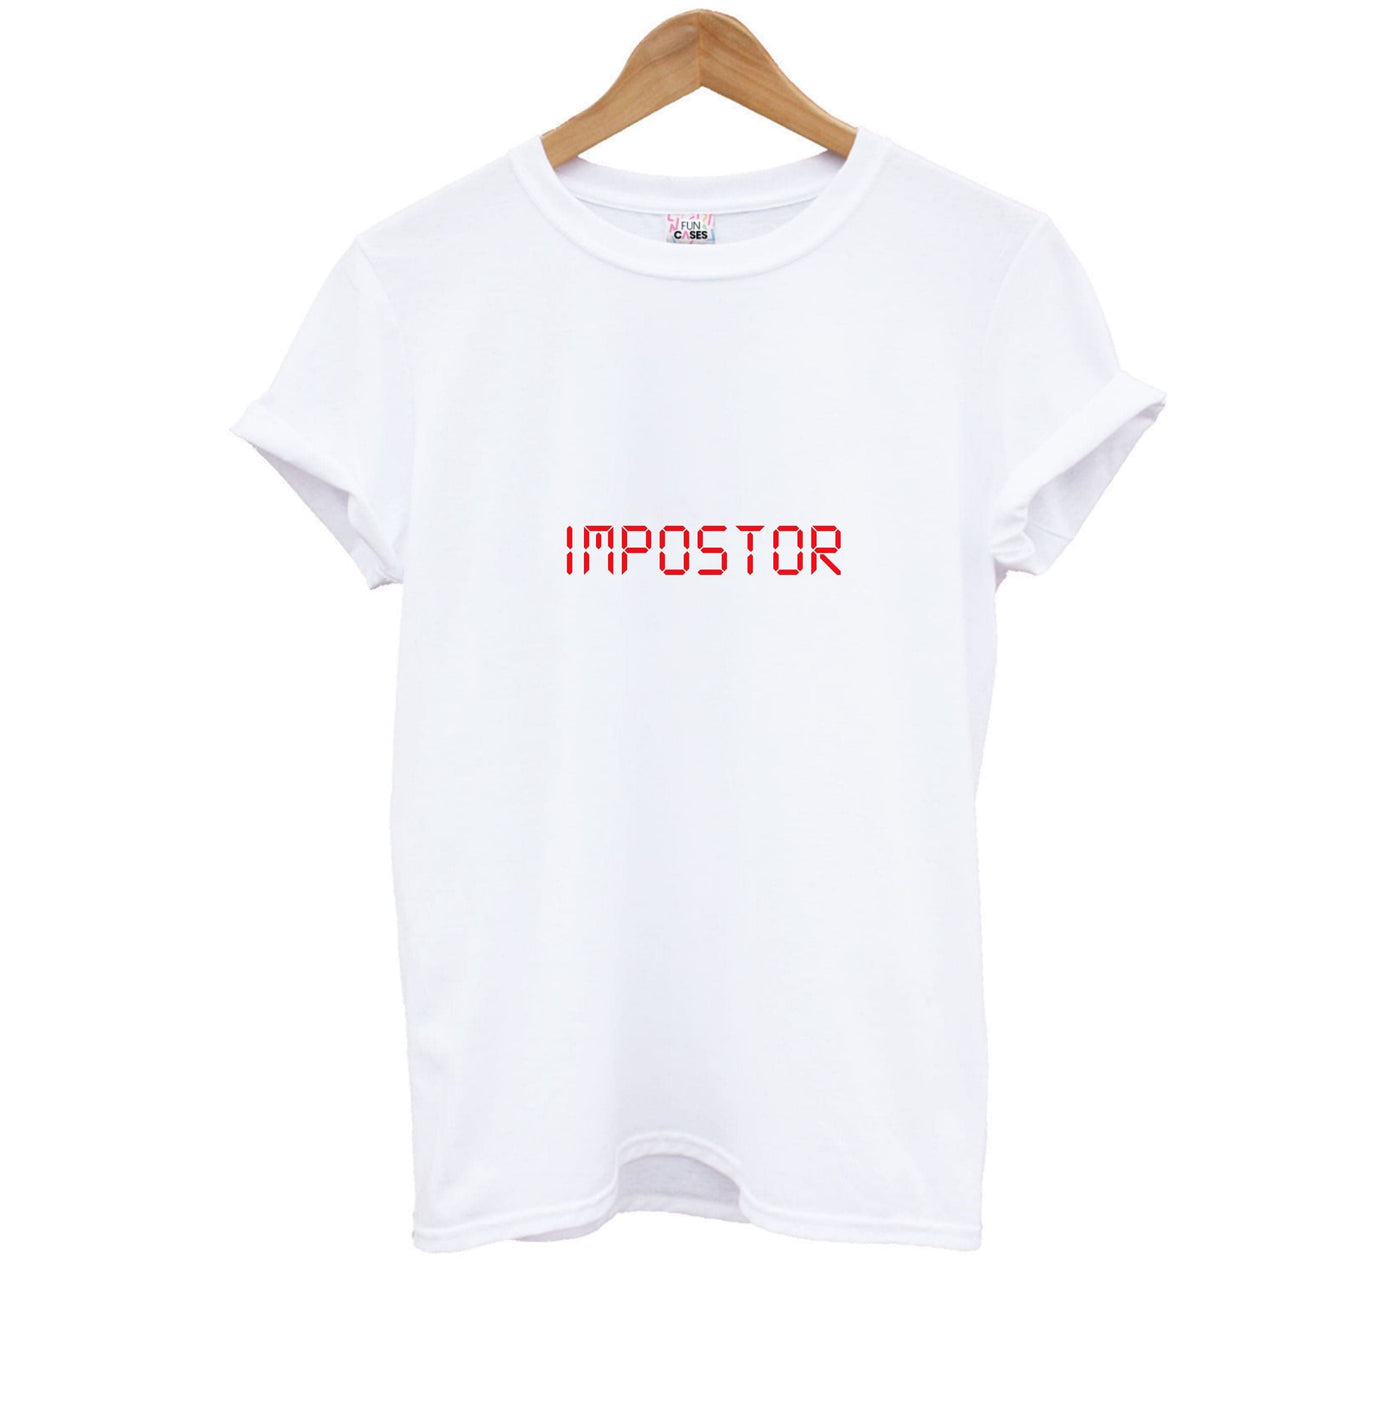 Imposter - Among Us Kids T-Shirt